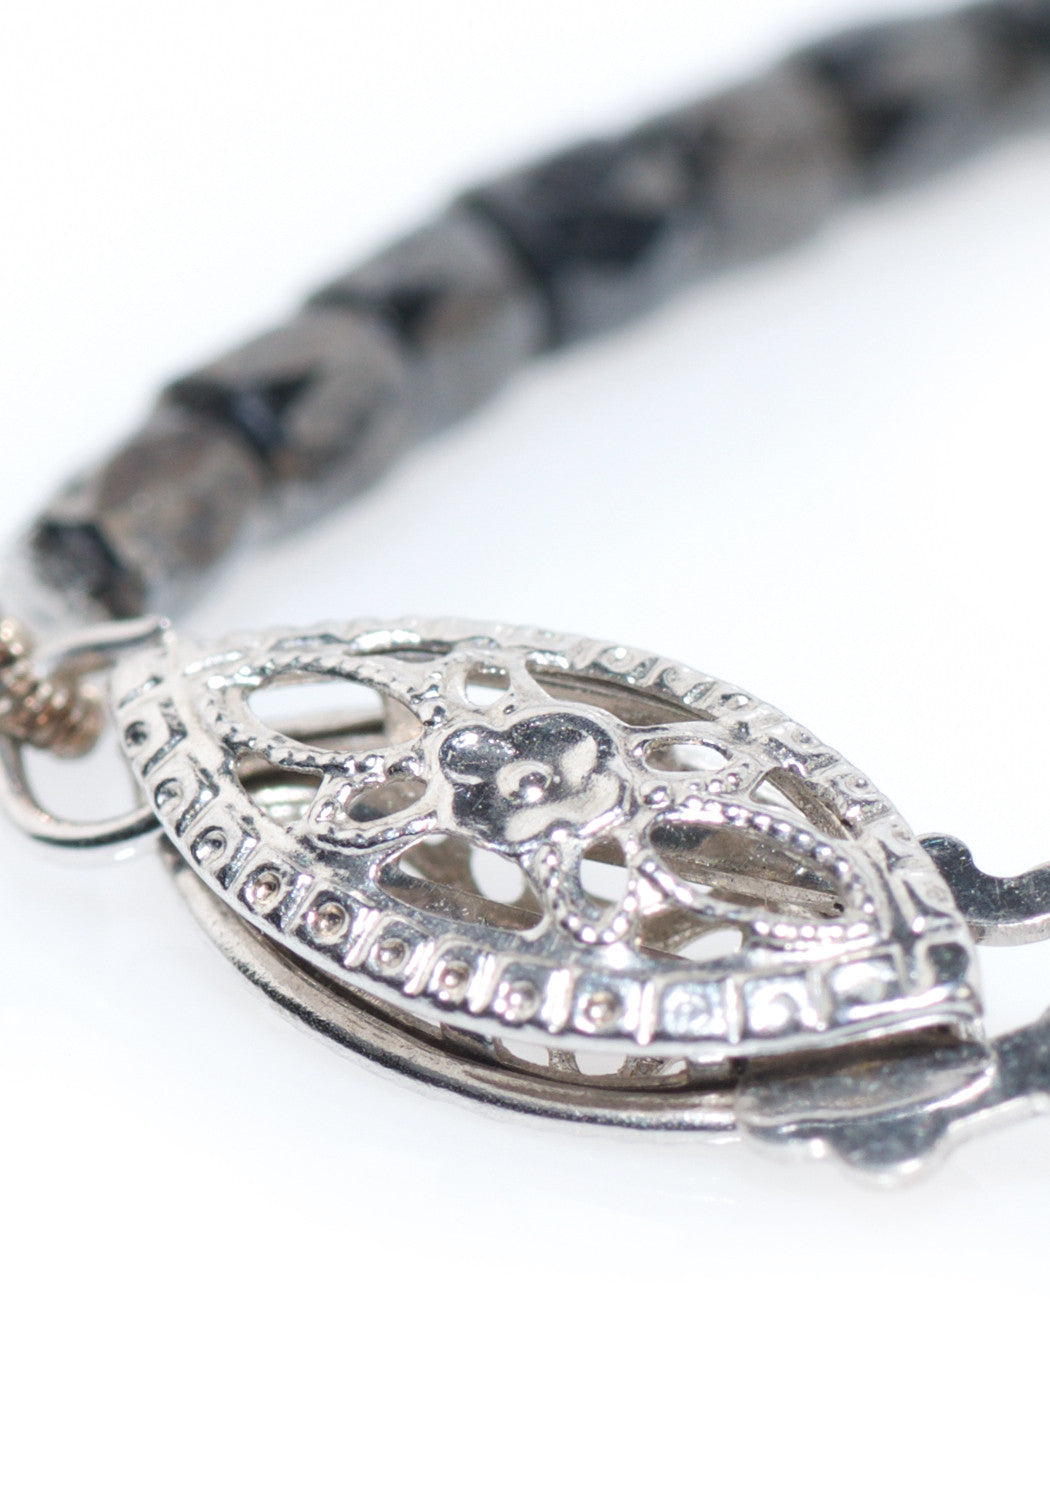 William Levine Black Diamond Bead Necklace | OsterJewelers.com